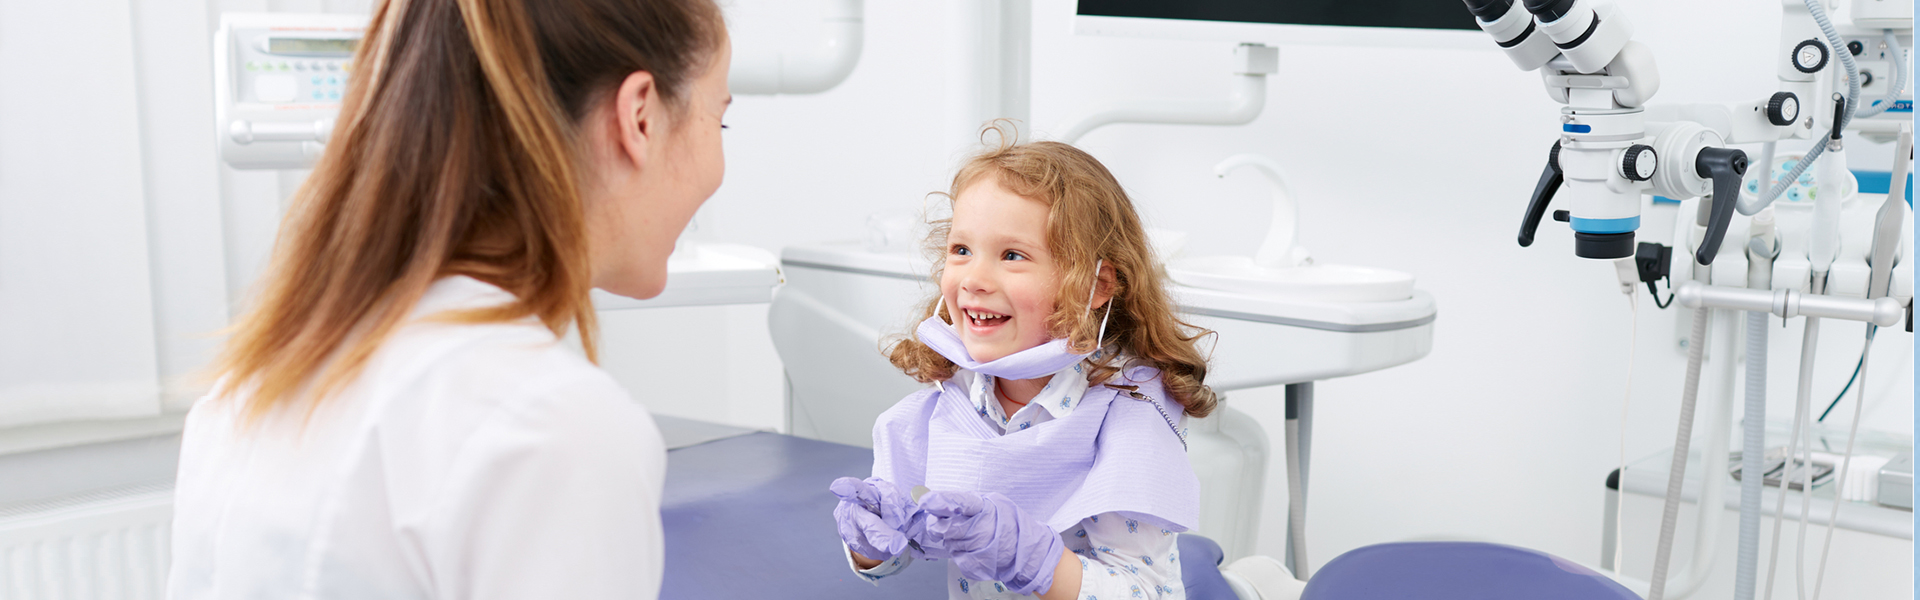 Can Dental Care in Pediatric Dentistry Impact Children’s Health?